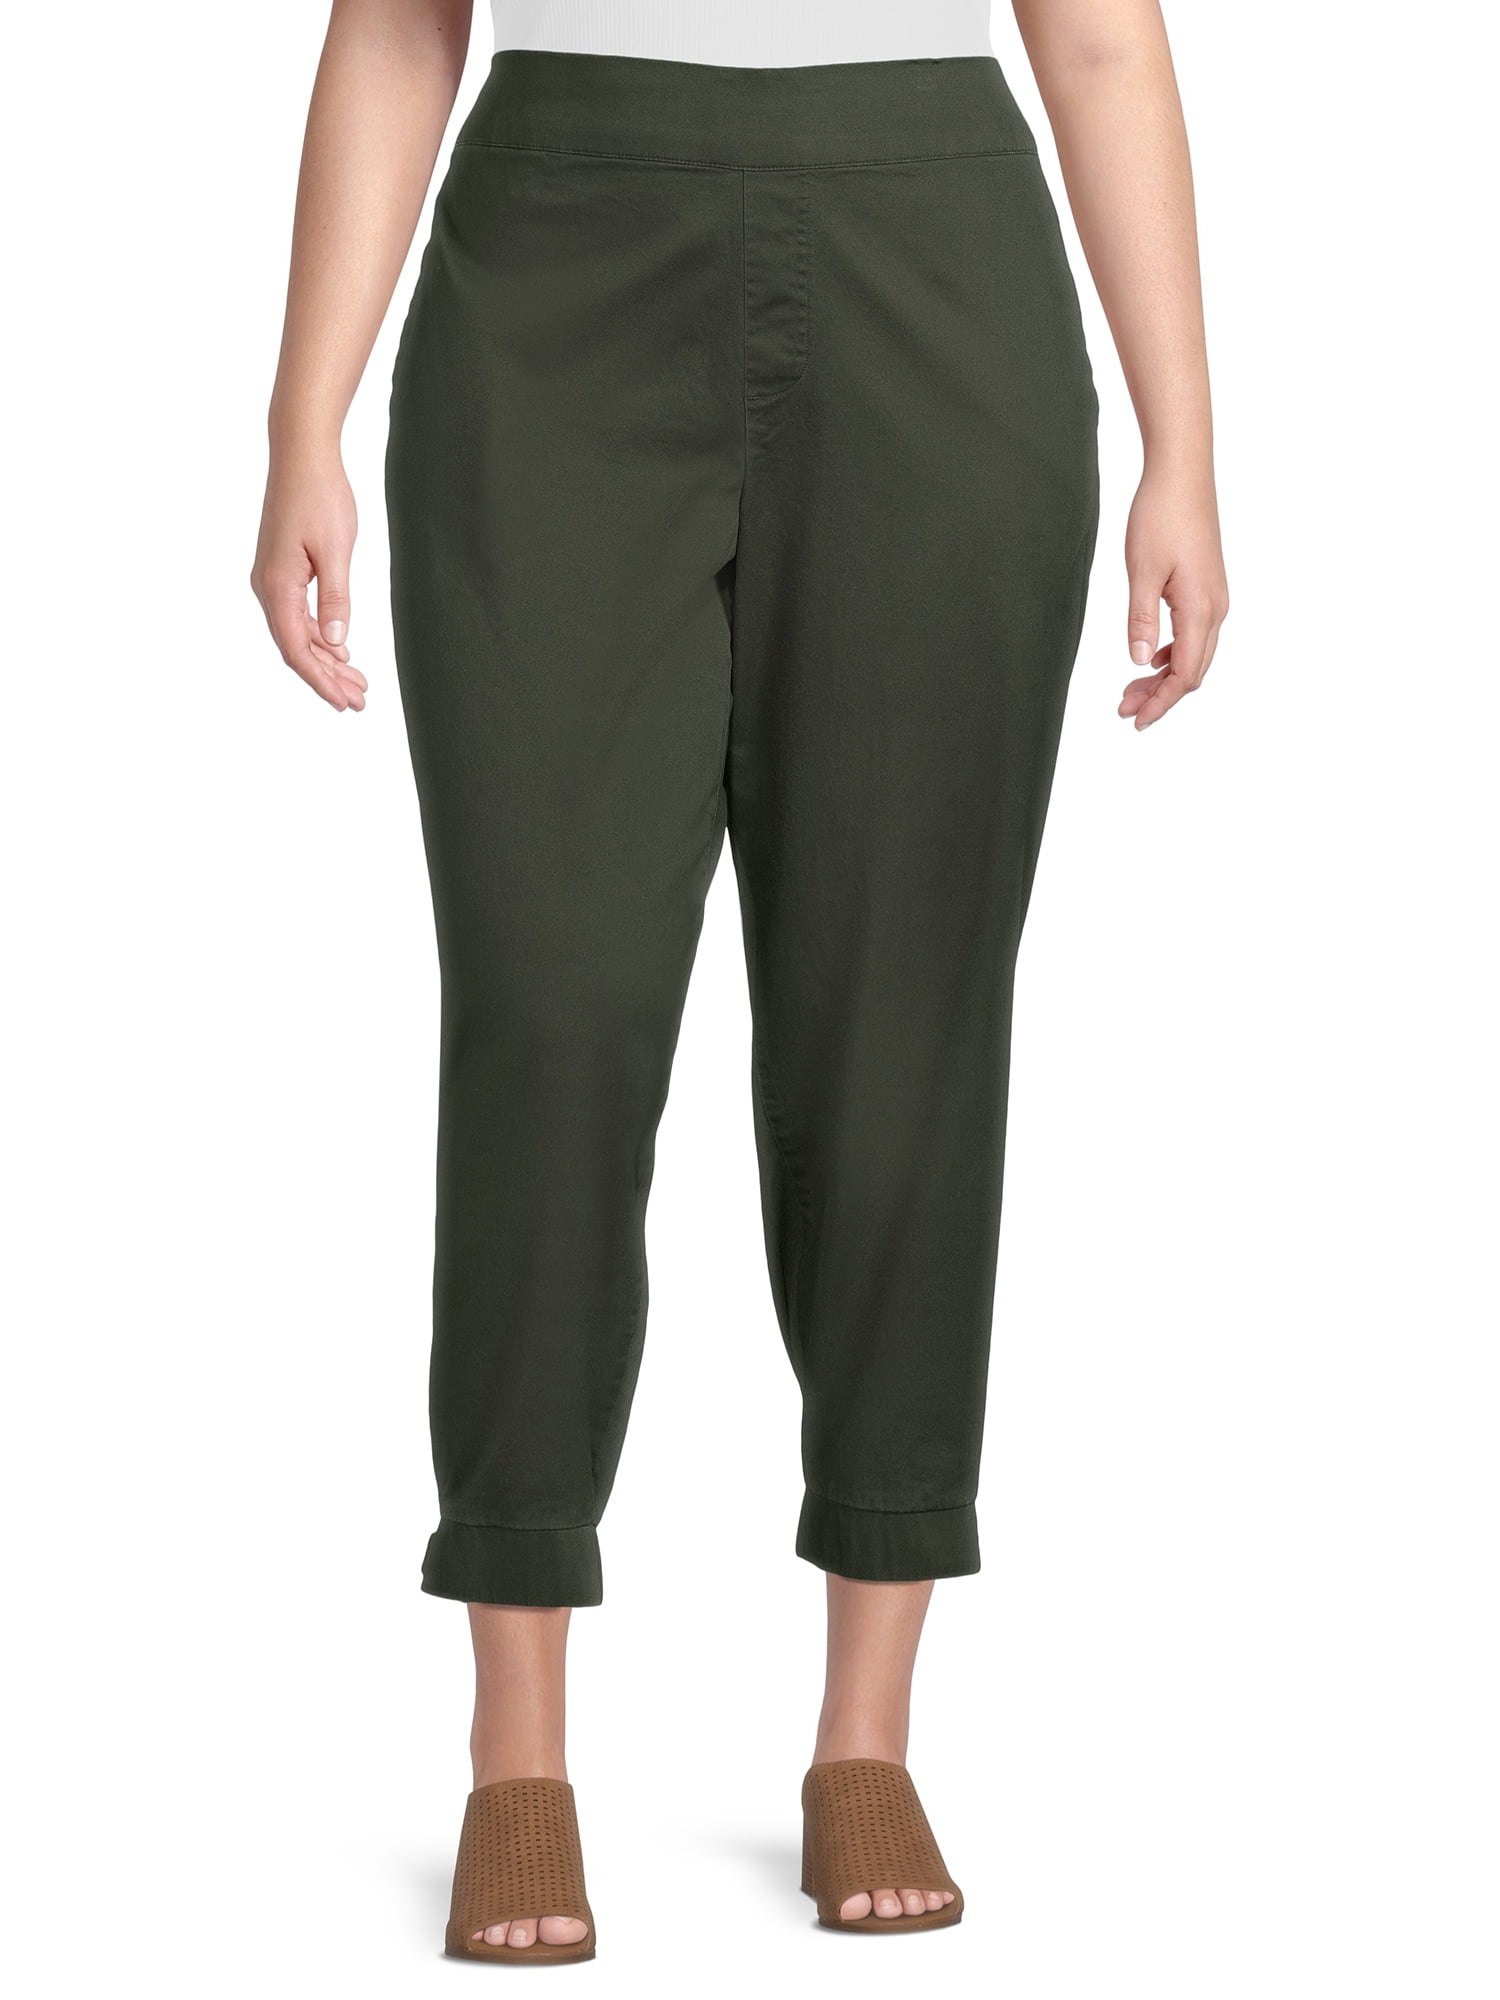 Terra & Sky Women's Plus Size Pull-On Jogger Pants - Walmart.com